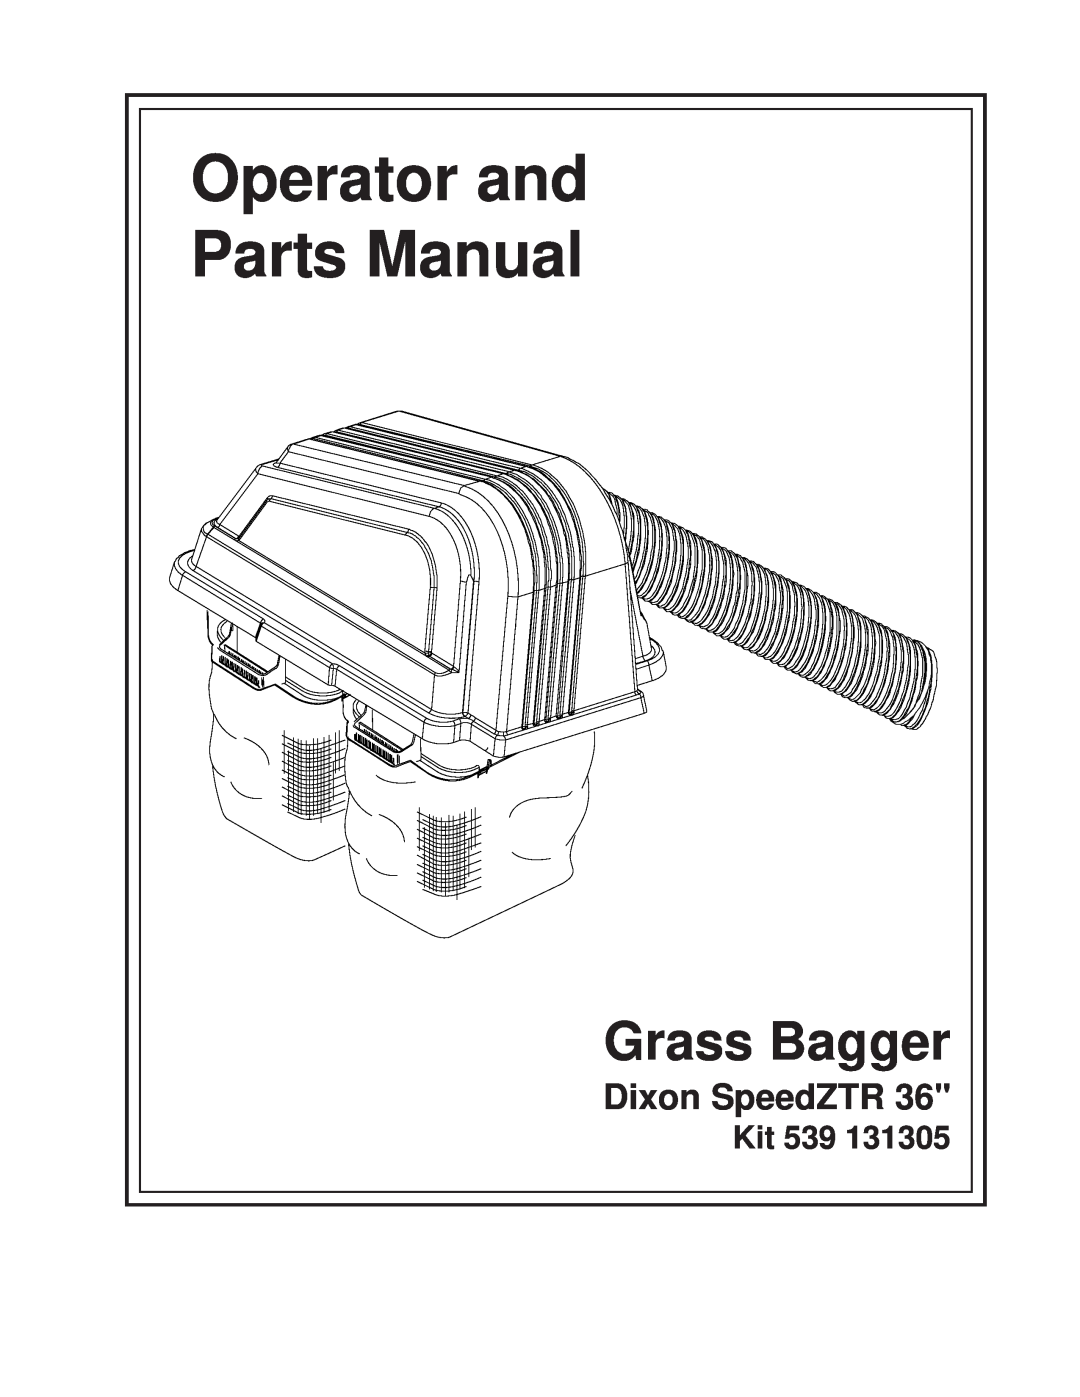 Dixon 539 131305 manual Kit 539, Operator and Parts Manual, Grass Bagger, Dixon SpeedZTR 